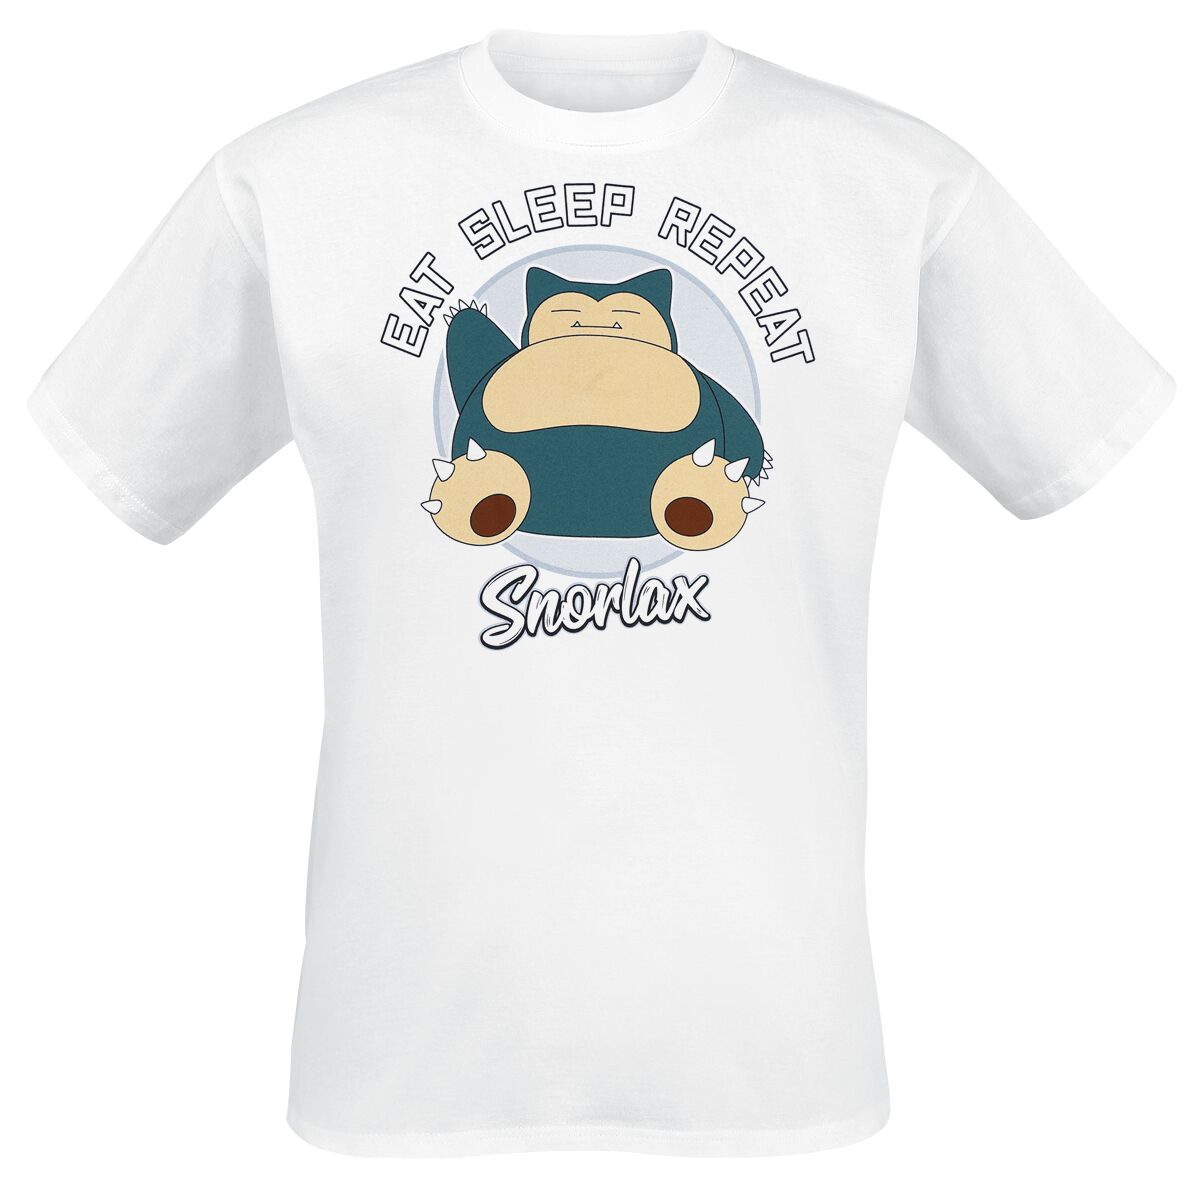 Pokémon Snorlax - Eat Sleep Repeat T-Shirt white